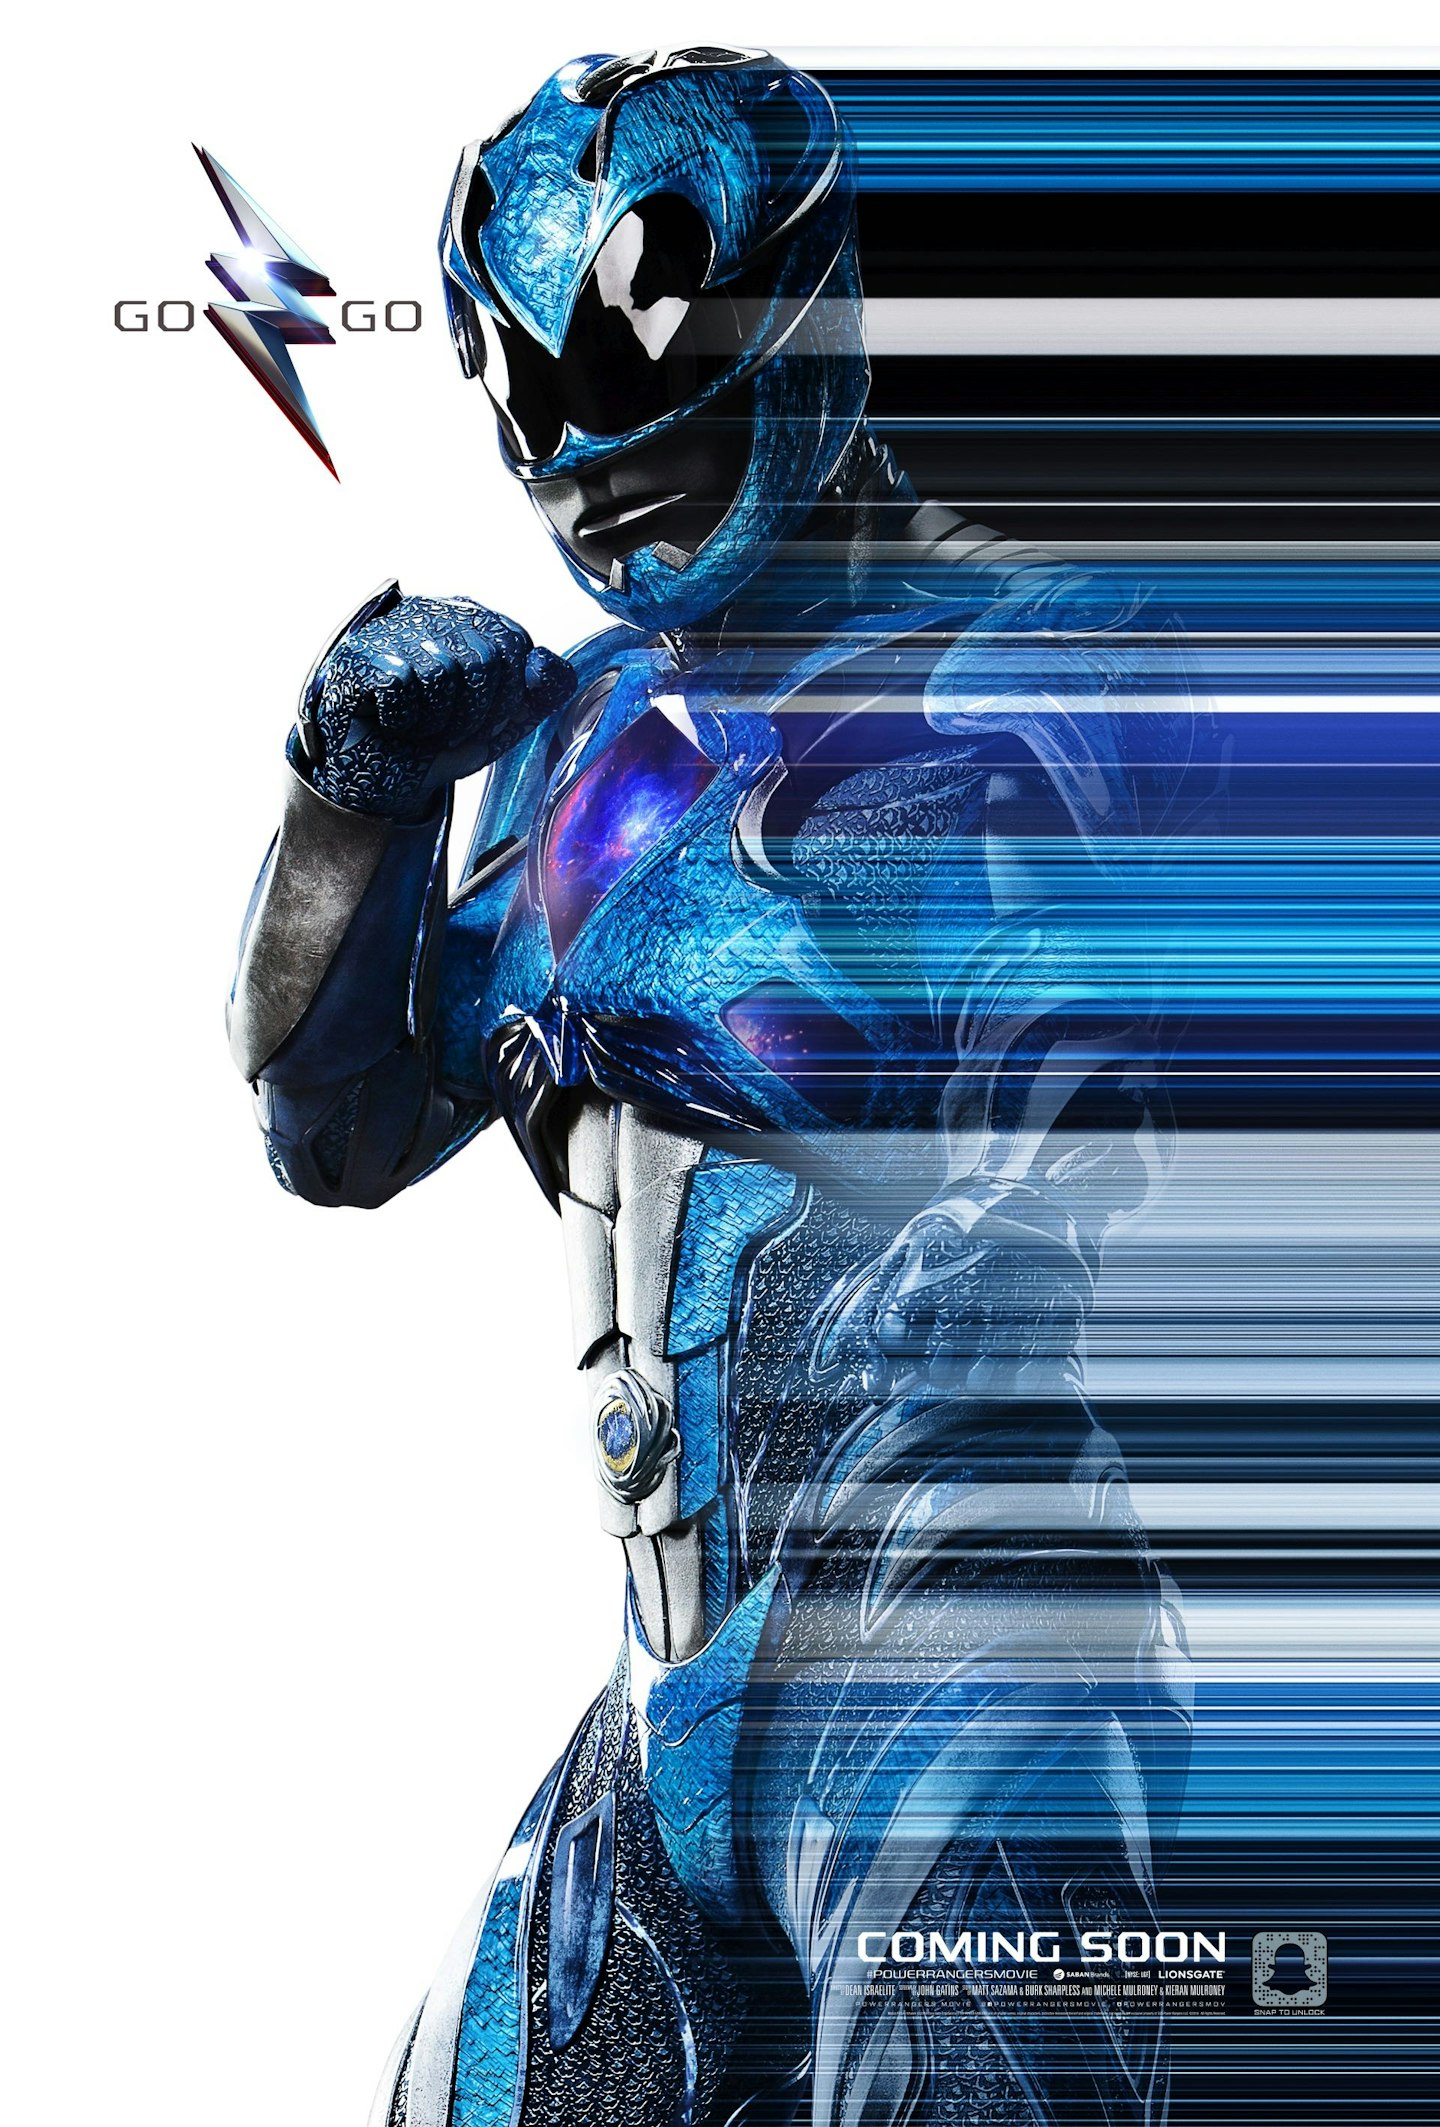 Power Rangers suit streak character posters